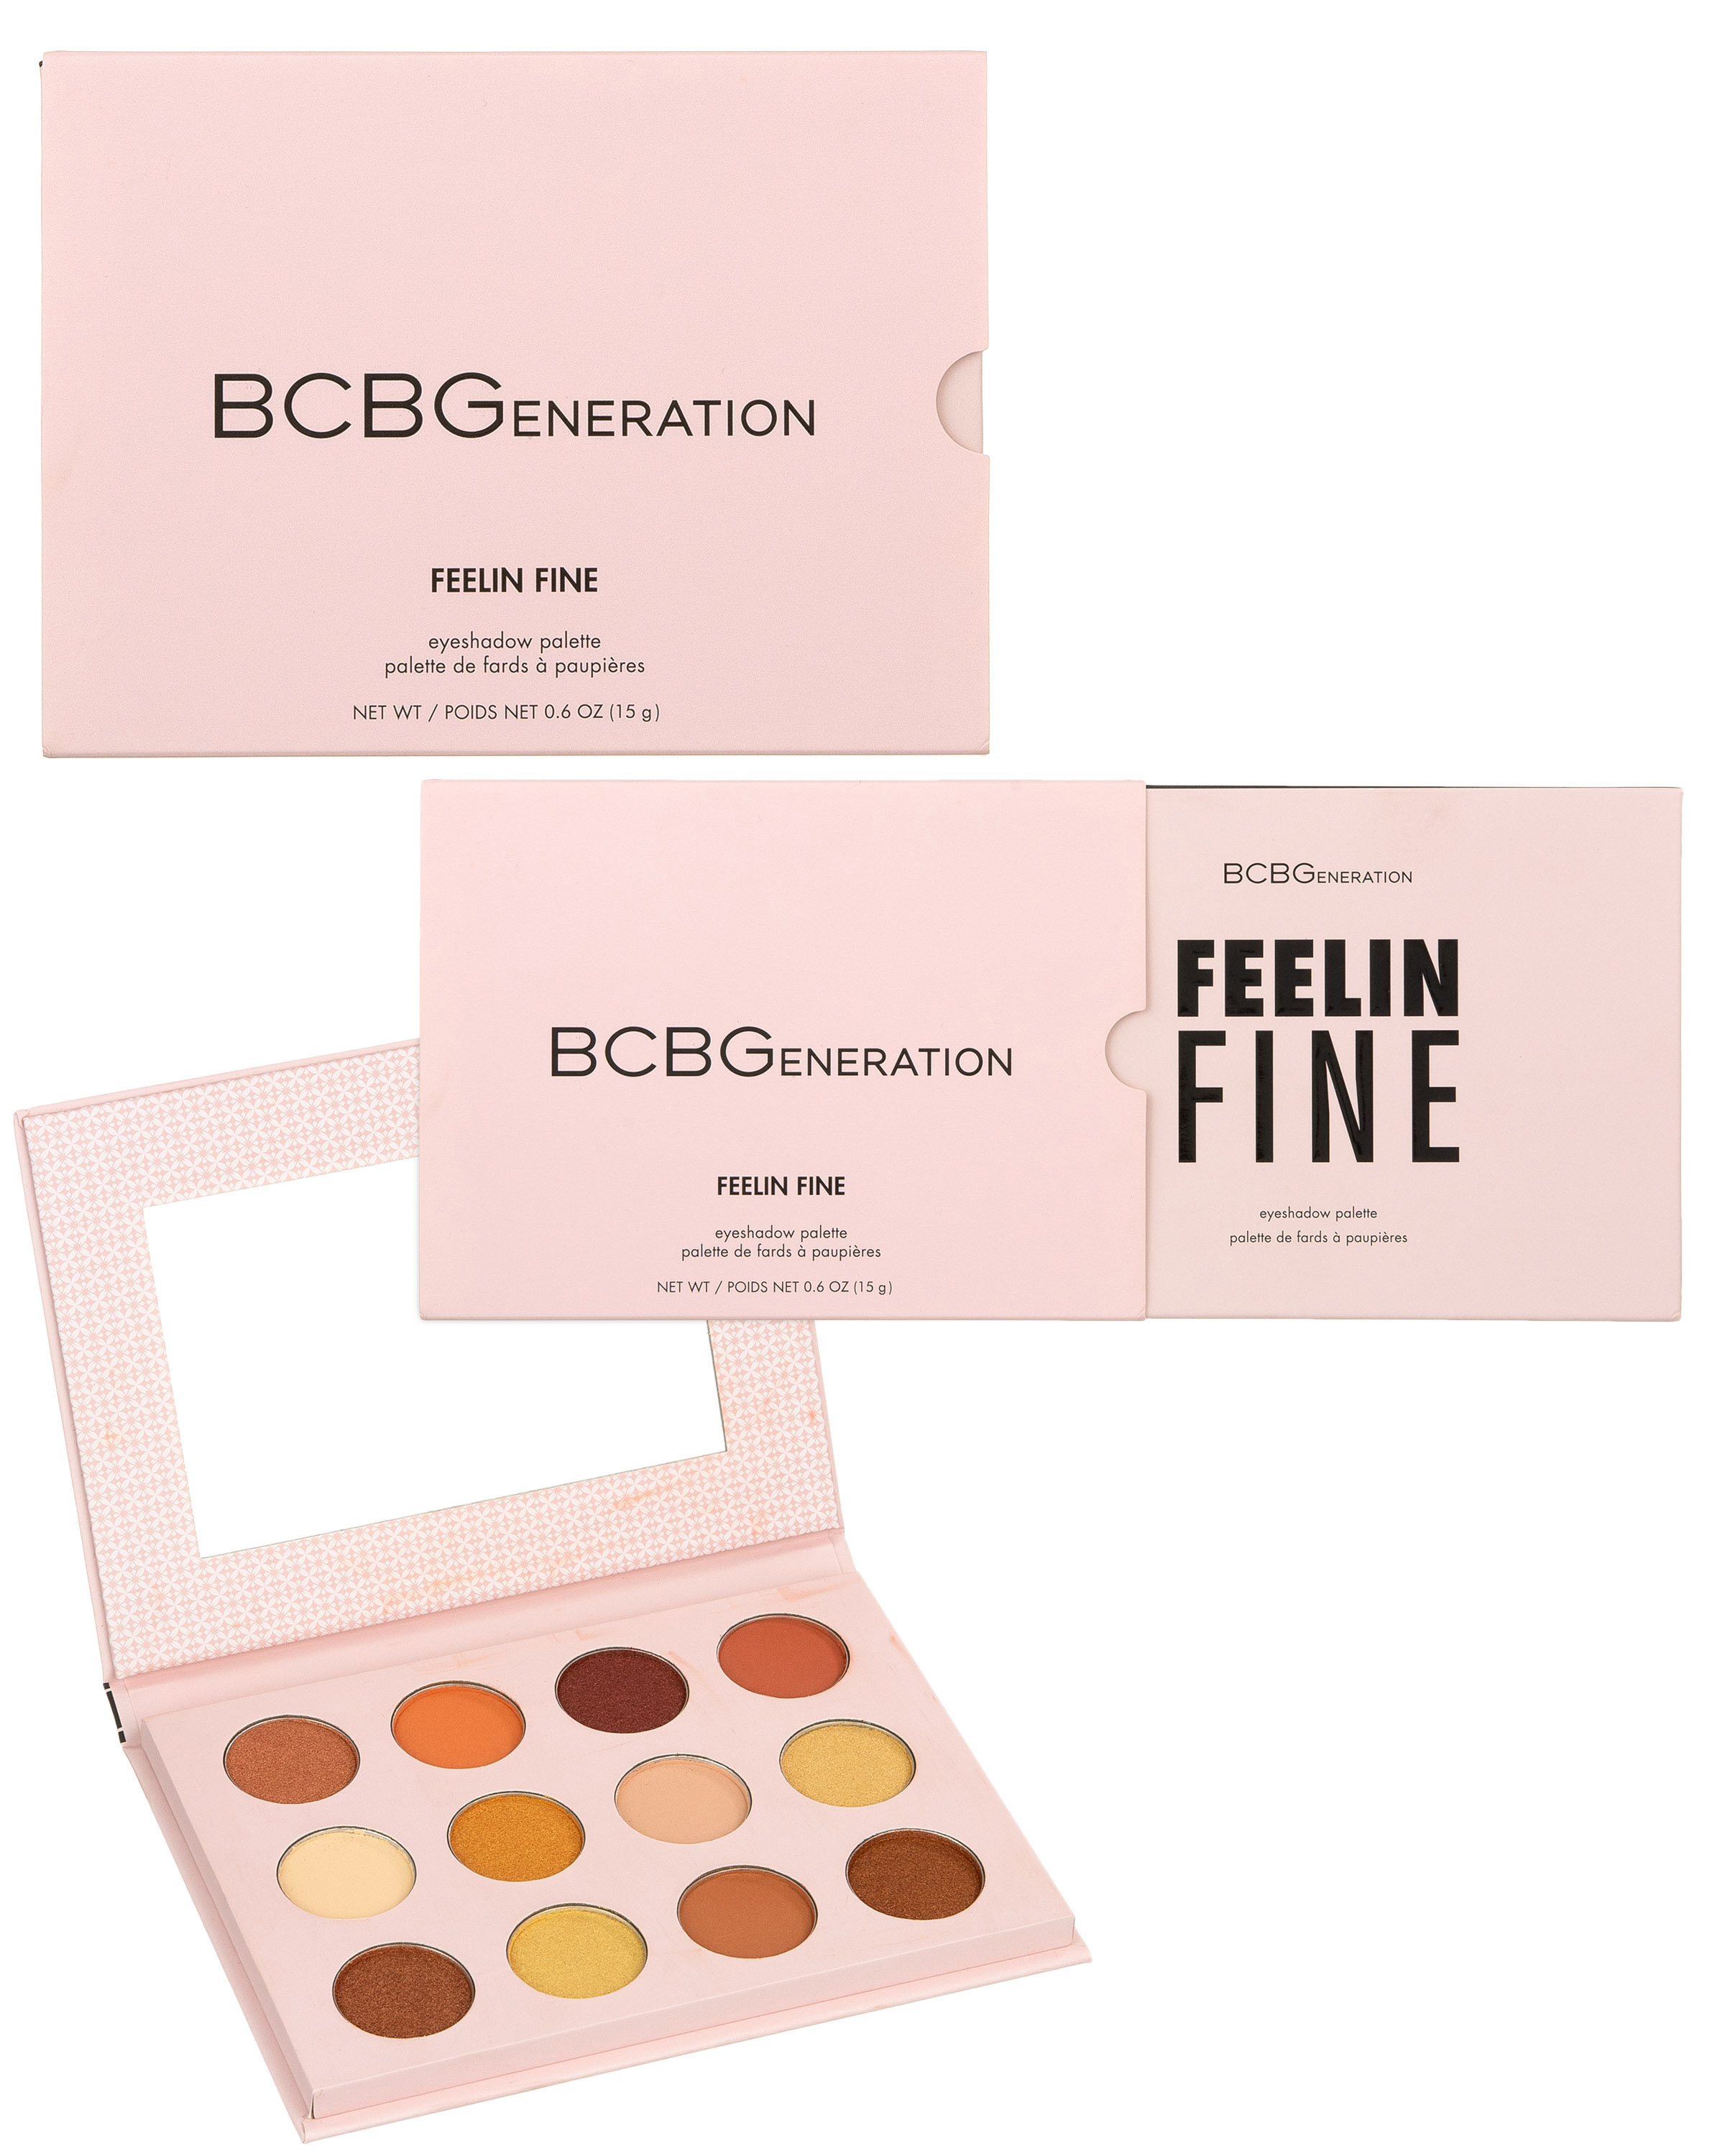 BCBGeneration Feelin Fine EYESHADOW Palette w/ 12 Pressed Pigment Shades